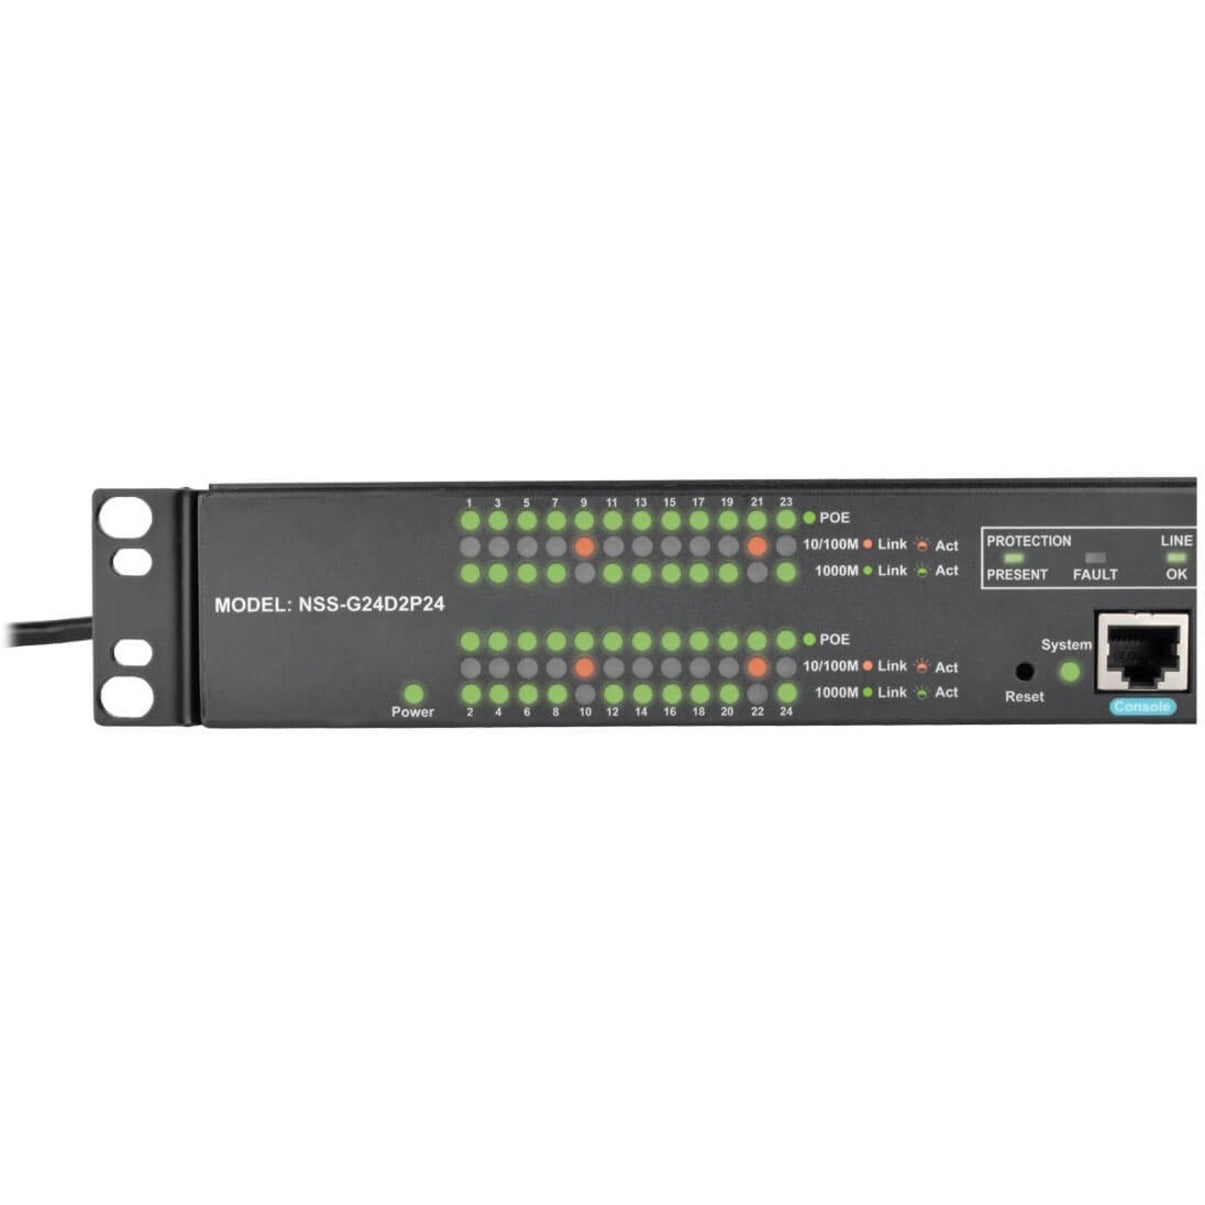 Tripp Lite NSS-G24D2P24 Ethernet Switch, 24 Port Gigabit L2 Managed PoE+ Switch